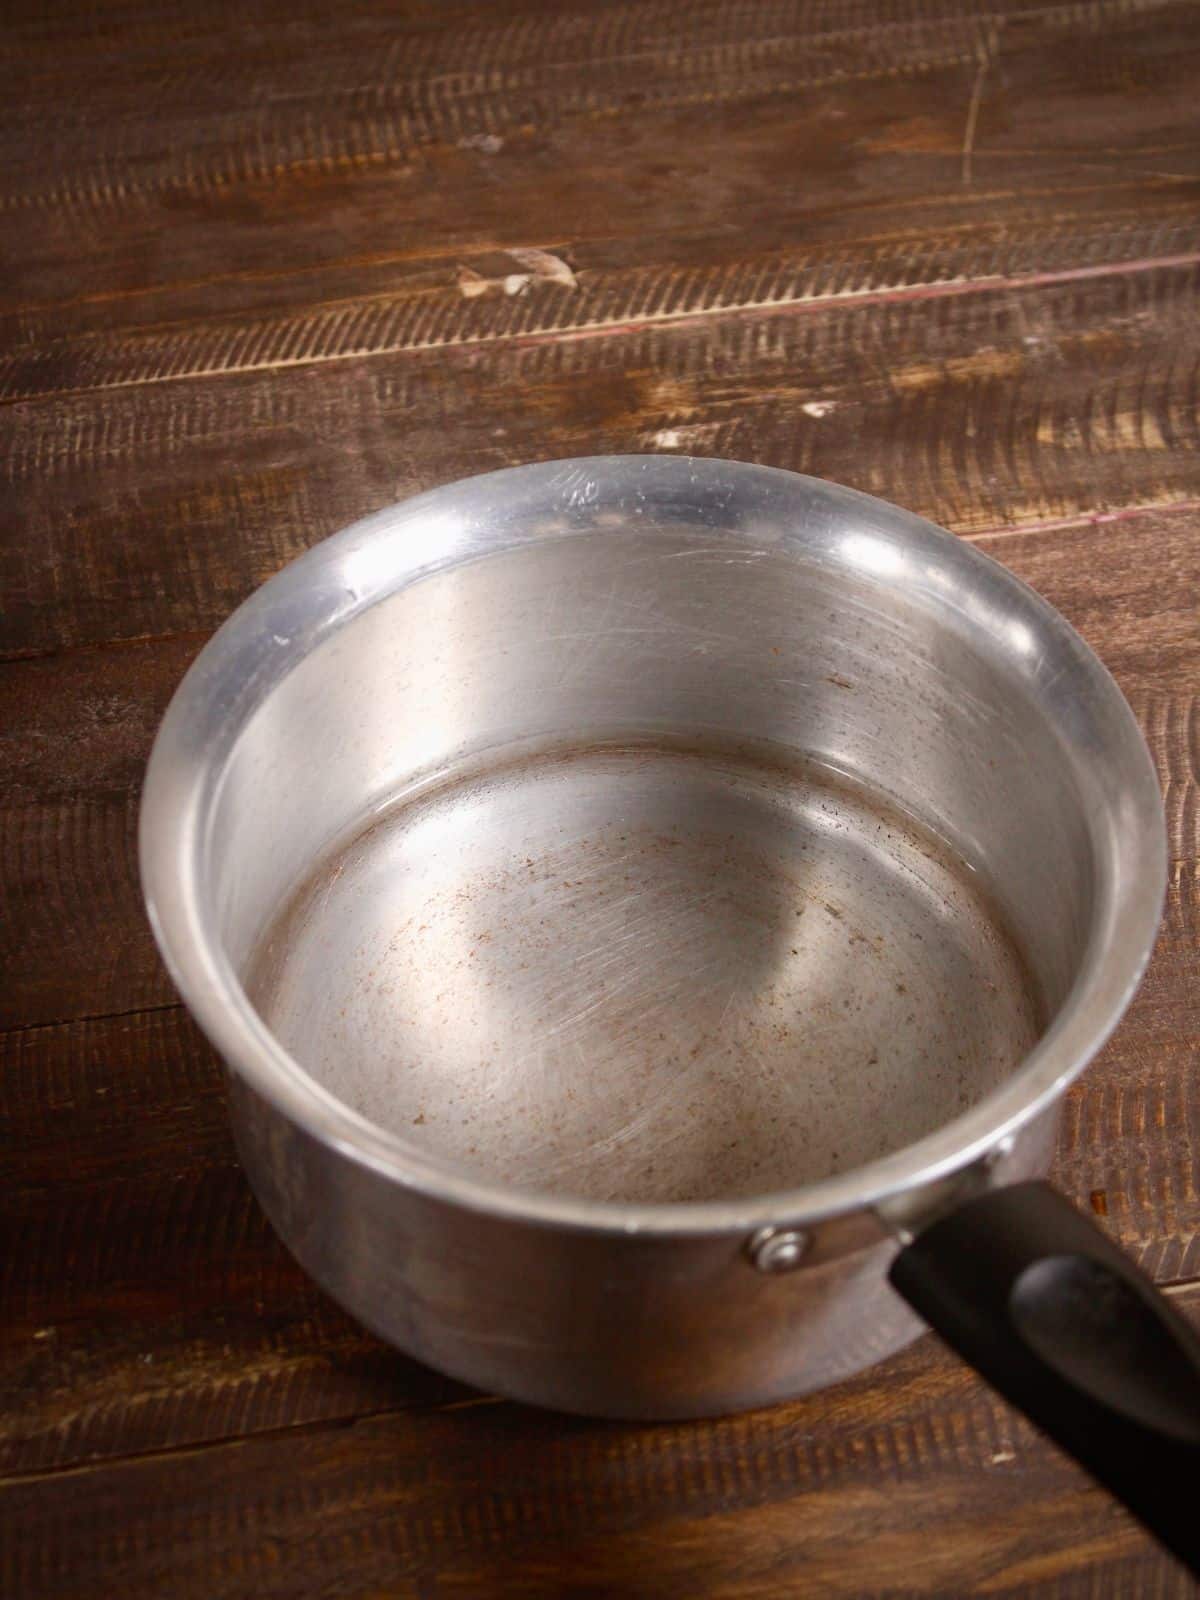 Boil water in a pan 